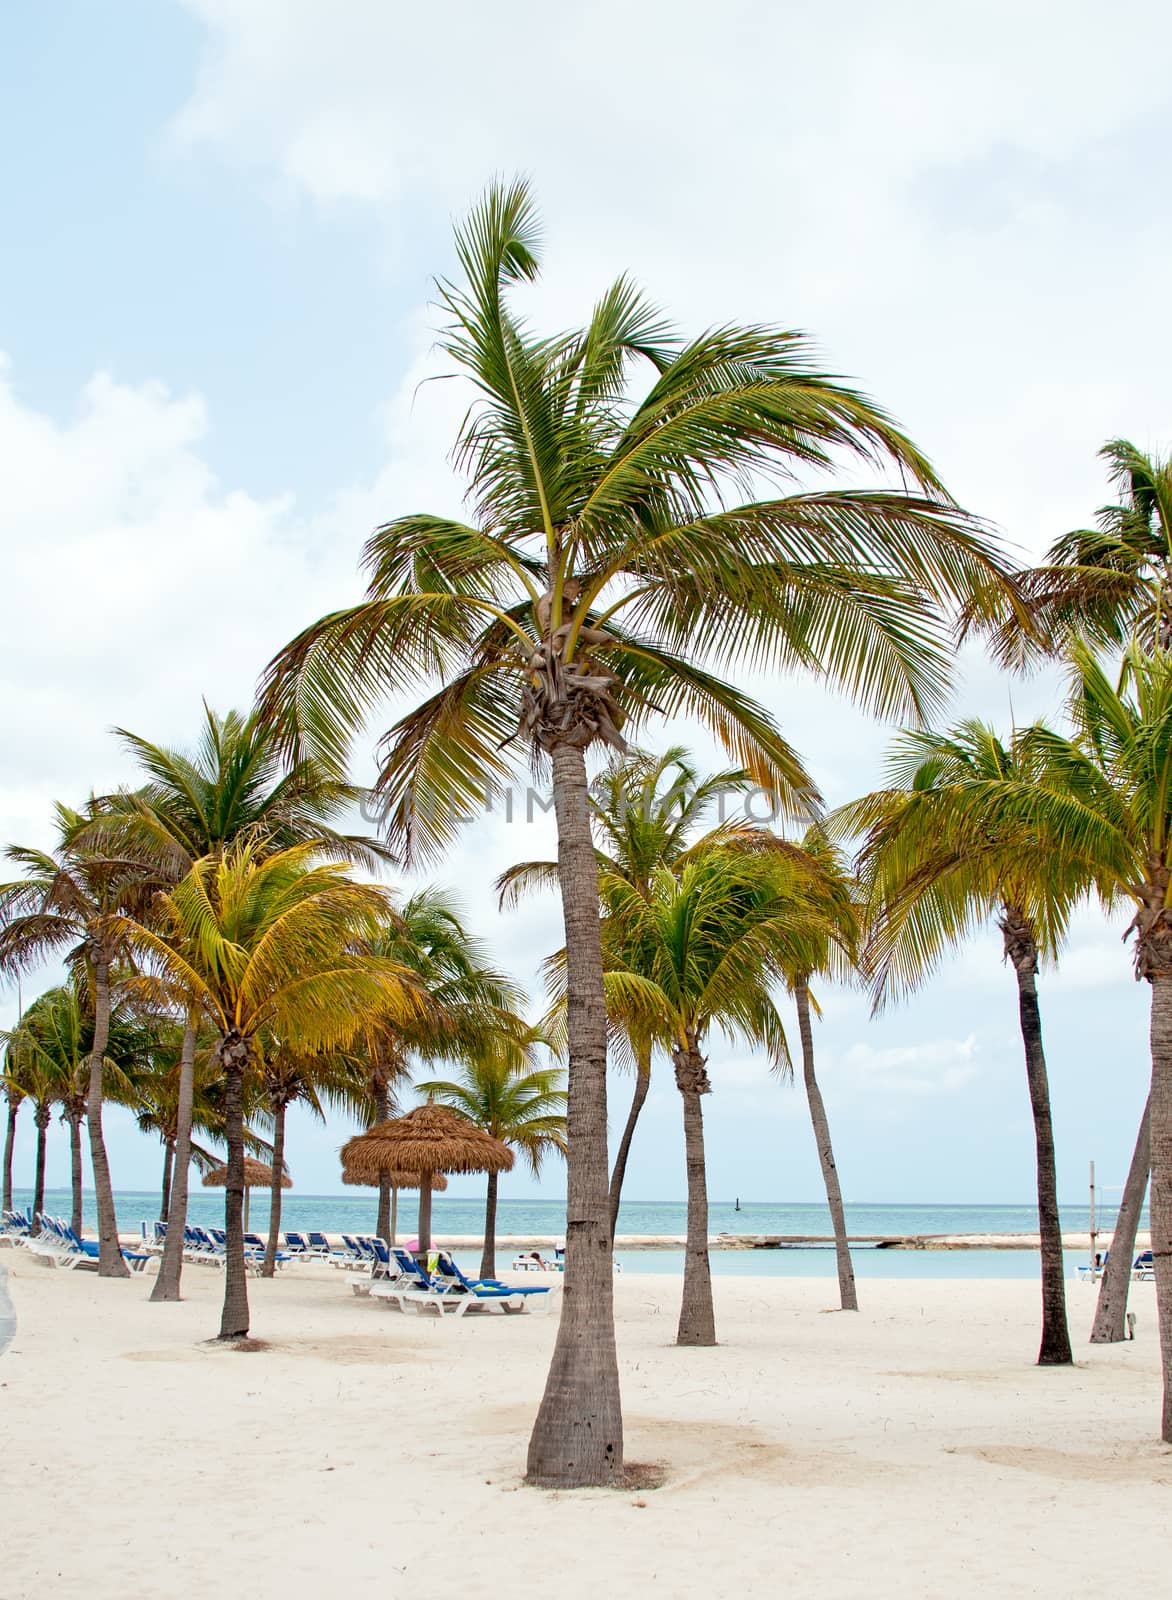 Palmtrees at the beach on Aruba island in the Caribbean Sea